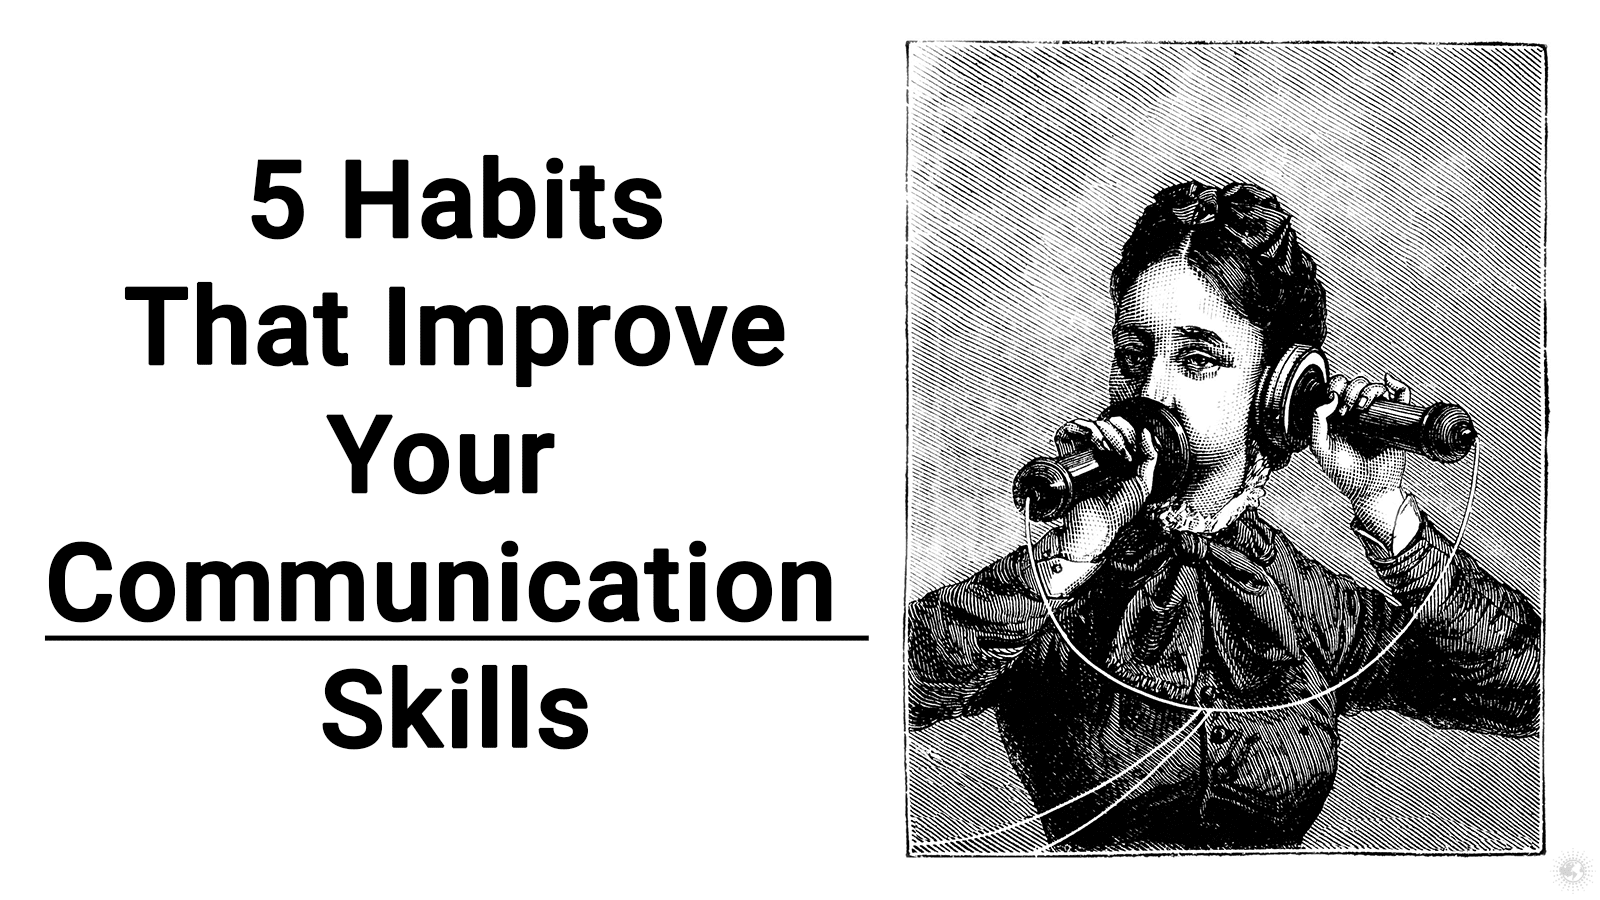 5 Habits That Improve Your Communication Skills